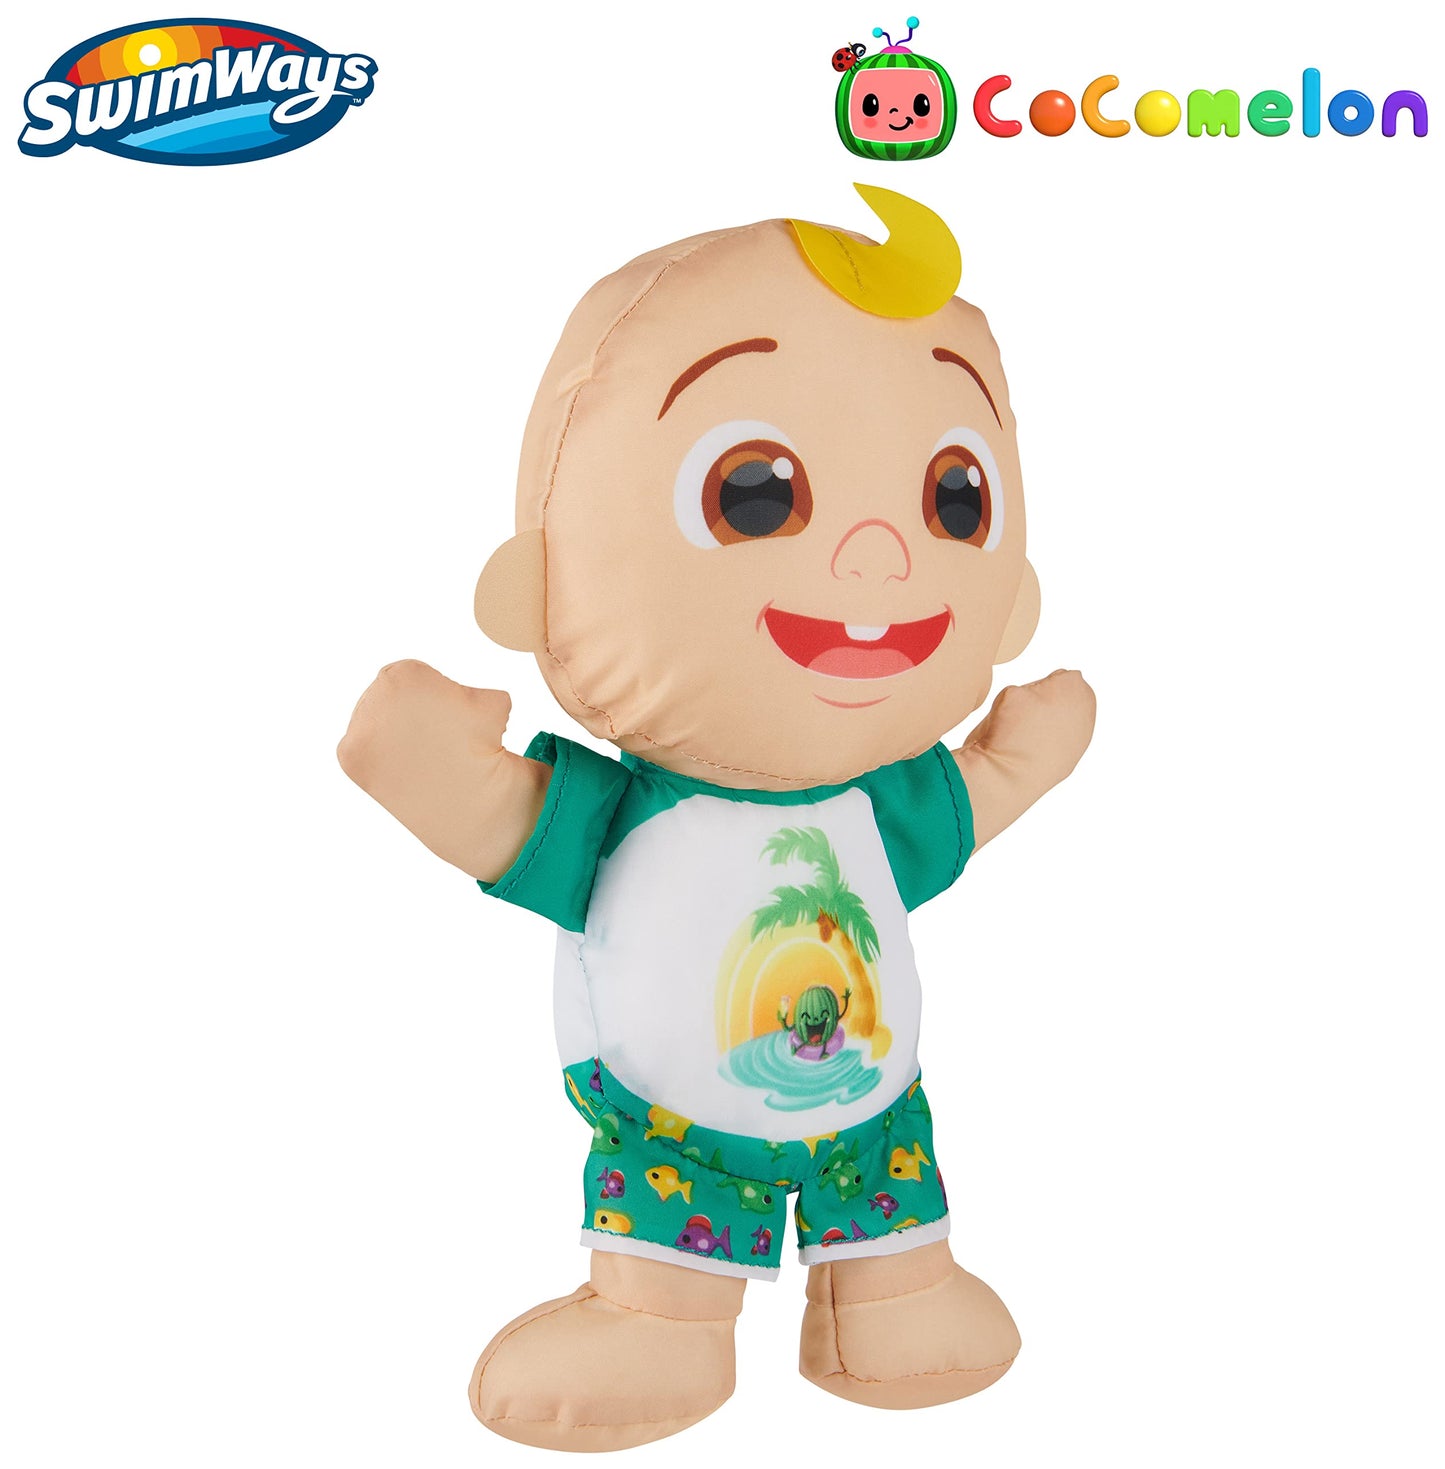 Swimways Cocomelon JJ Swim Huggable, Kids Toys, Bath Toys & Beach Toys, Floating Water Stuffed Animal for Kids Aged 1 & Up